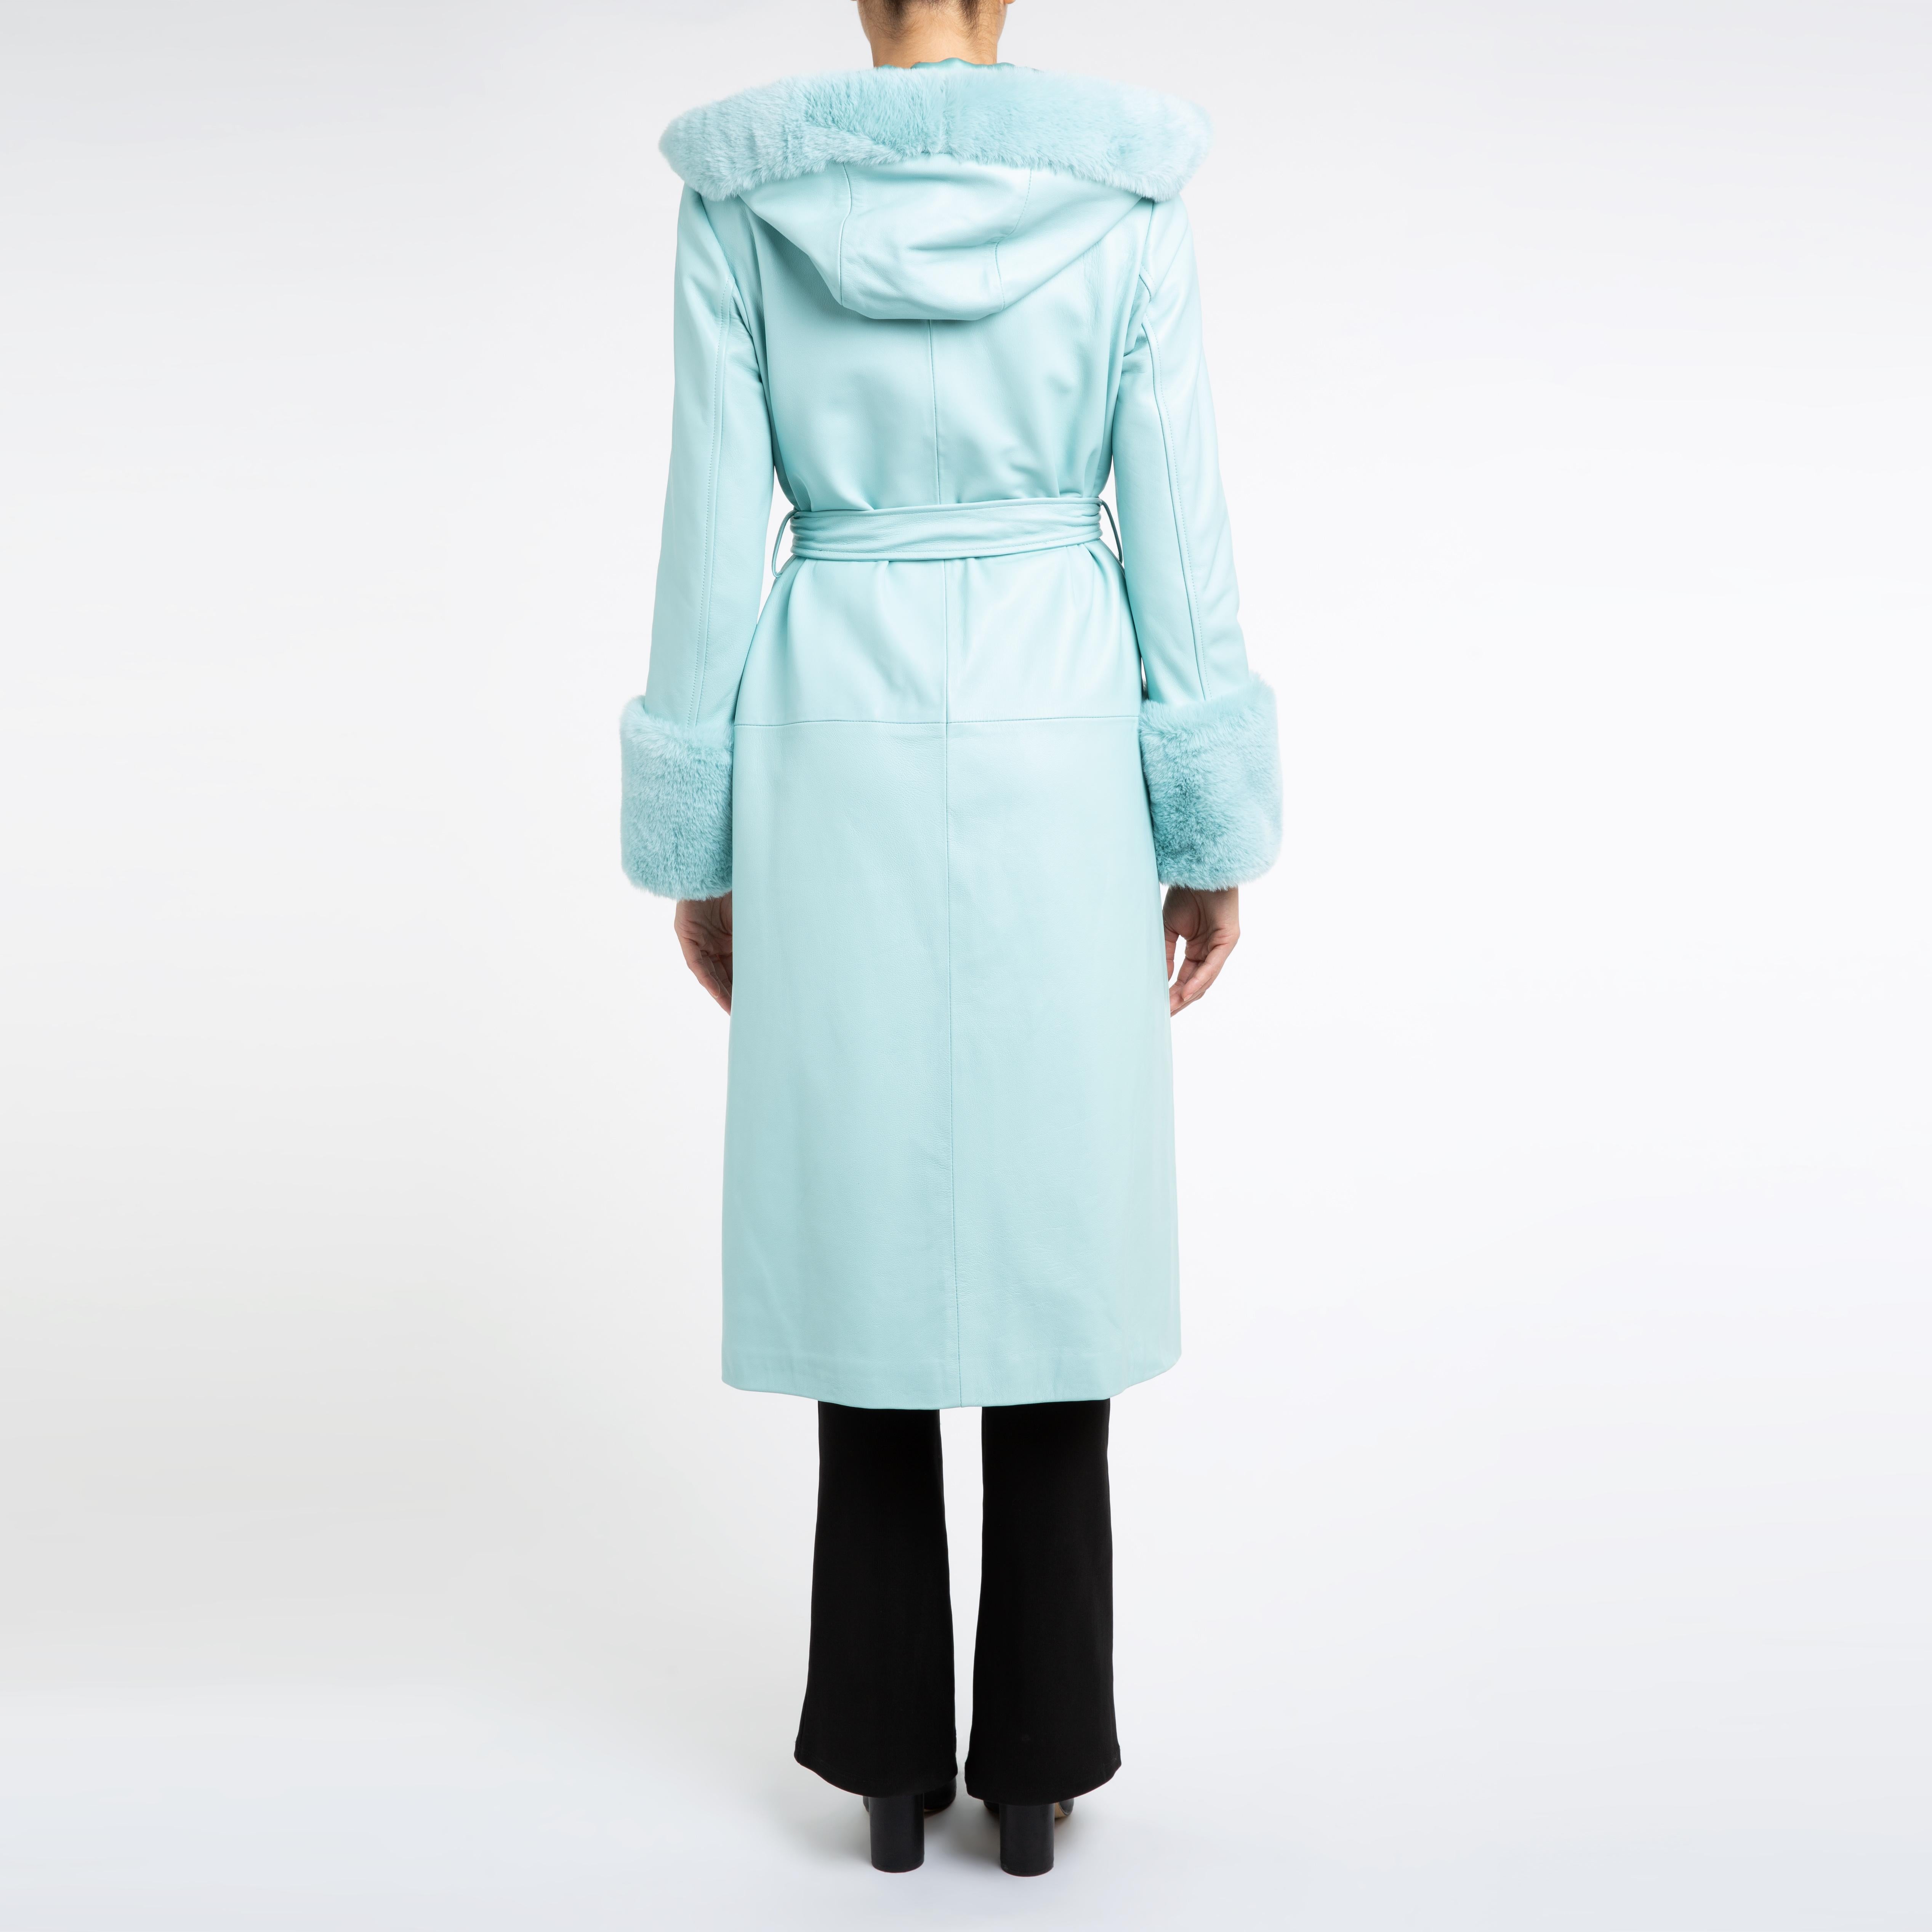 Verheyen London Hooded Leather Coat in Blue Aquamarine & Faux Fur - Size uk 8 For Sale 1